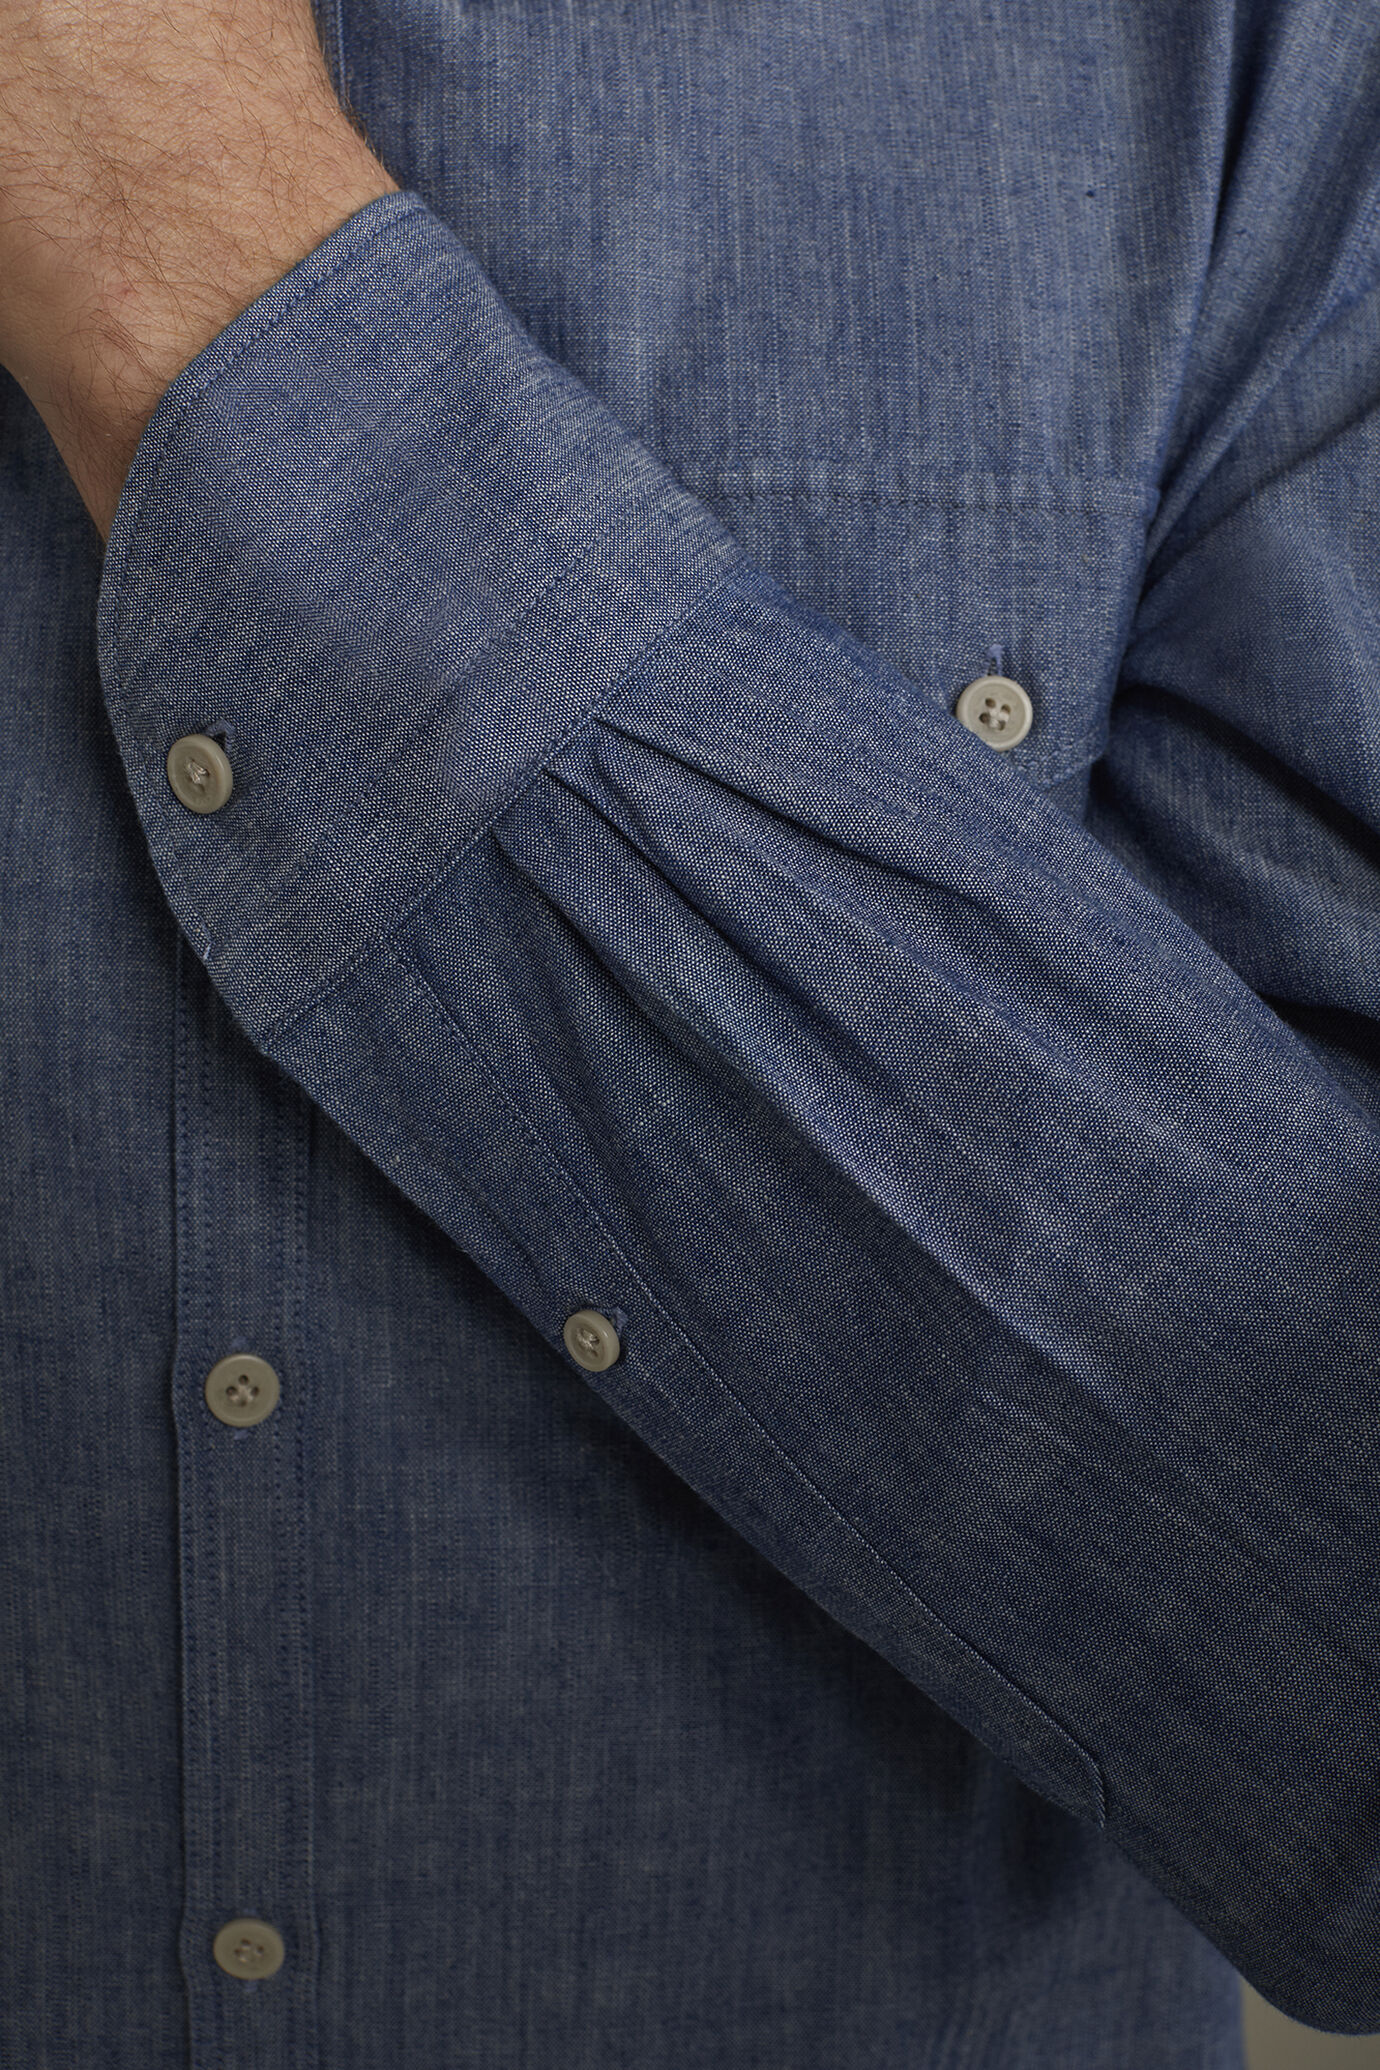 Men’s casual shirt classic collar 100% cotton denim fabric comfort fit image number 4